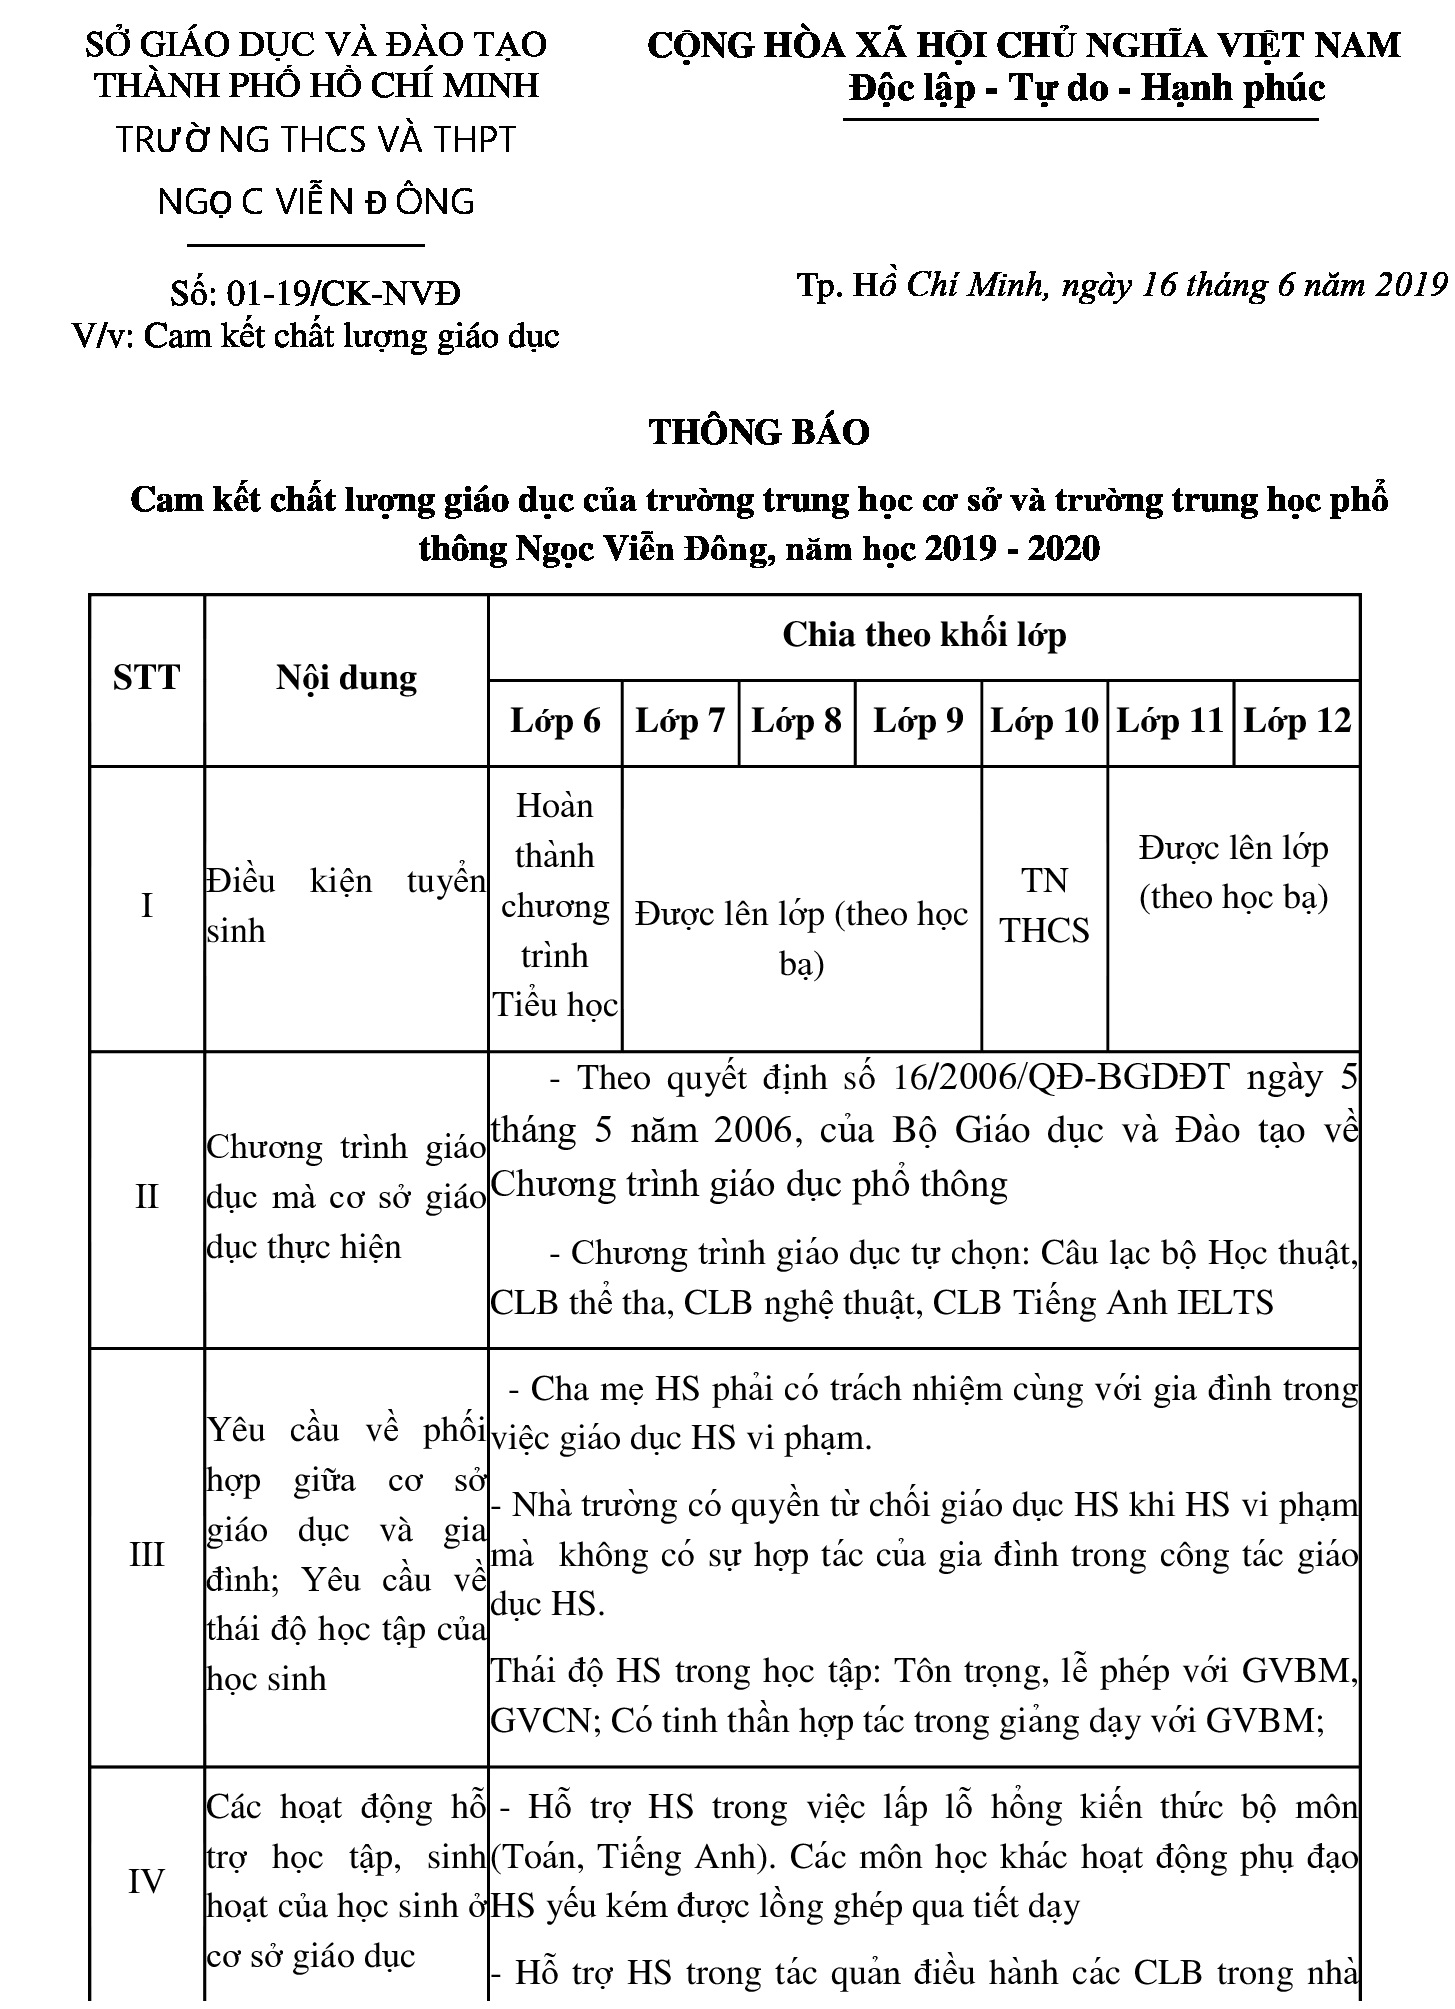 Thong-bao-cam-ket-chat-luong-giao-duc-cua-truong-THCS-THPT-Ngoc-Vien-Dong-2